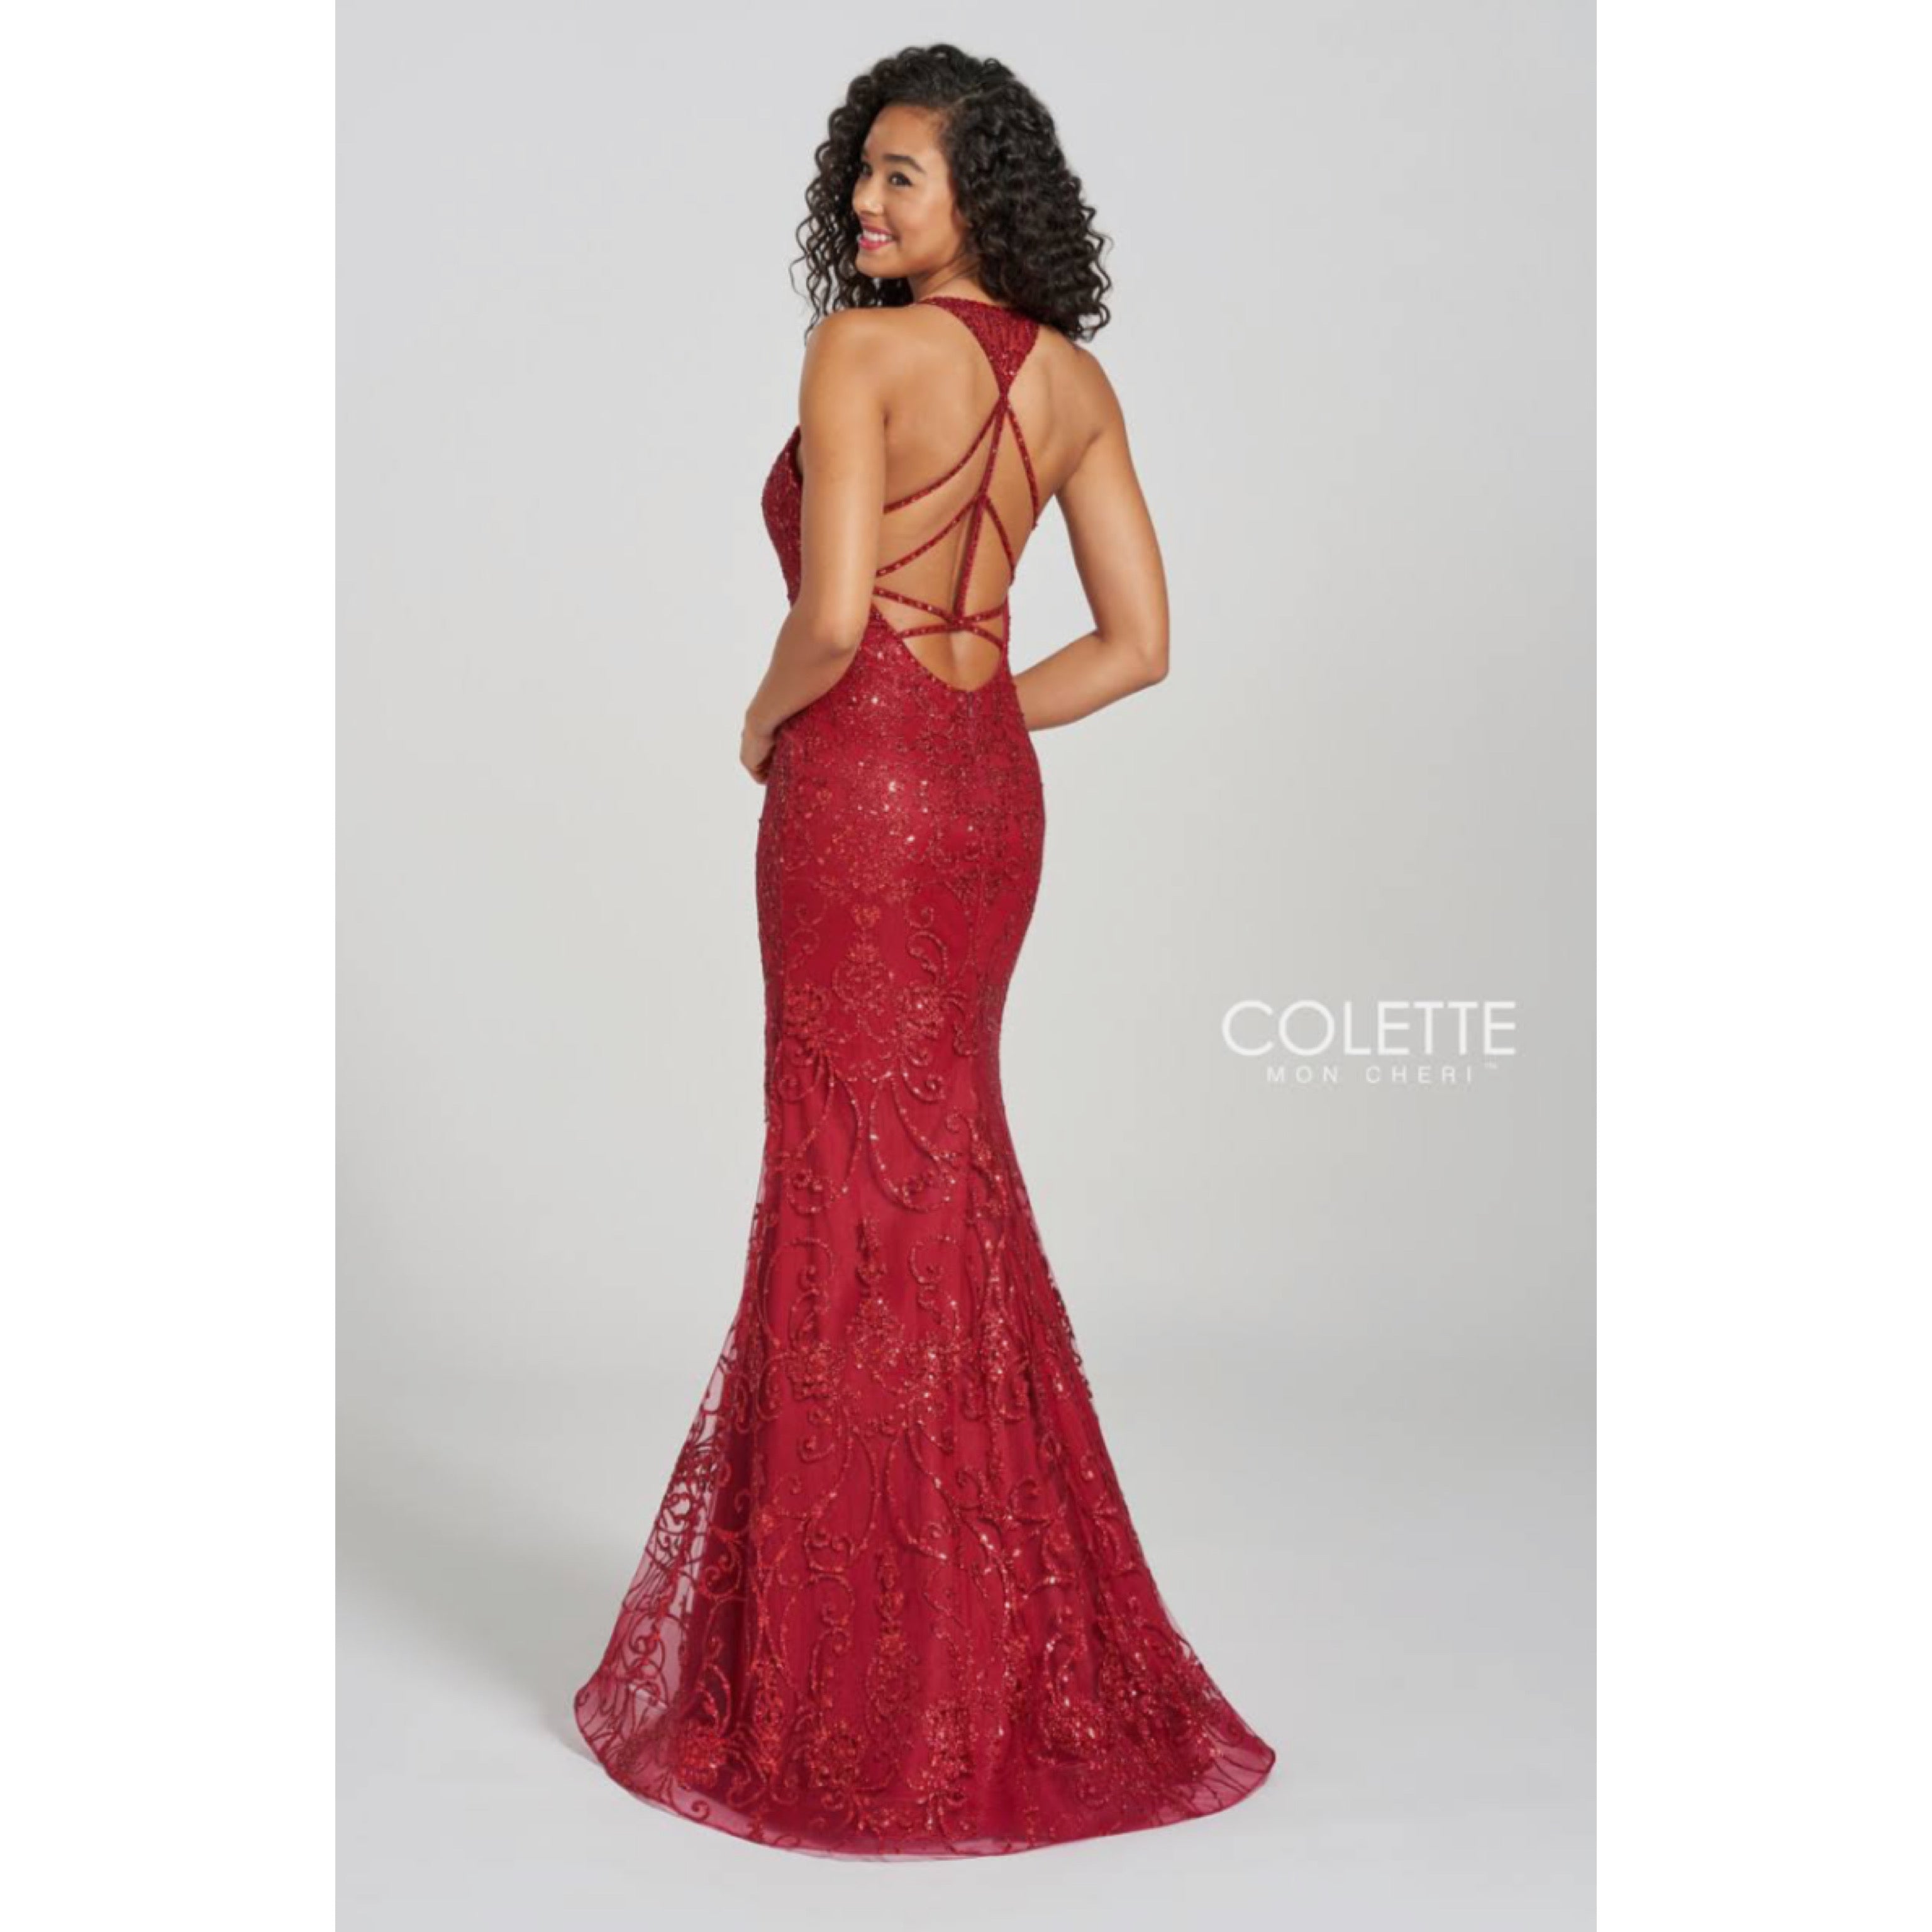 Colette brick red dress, size 0